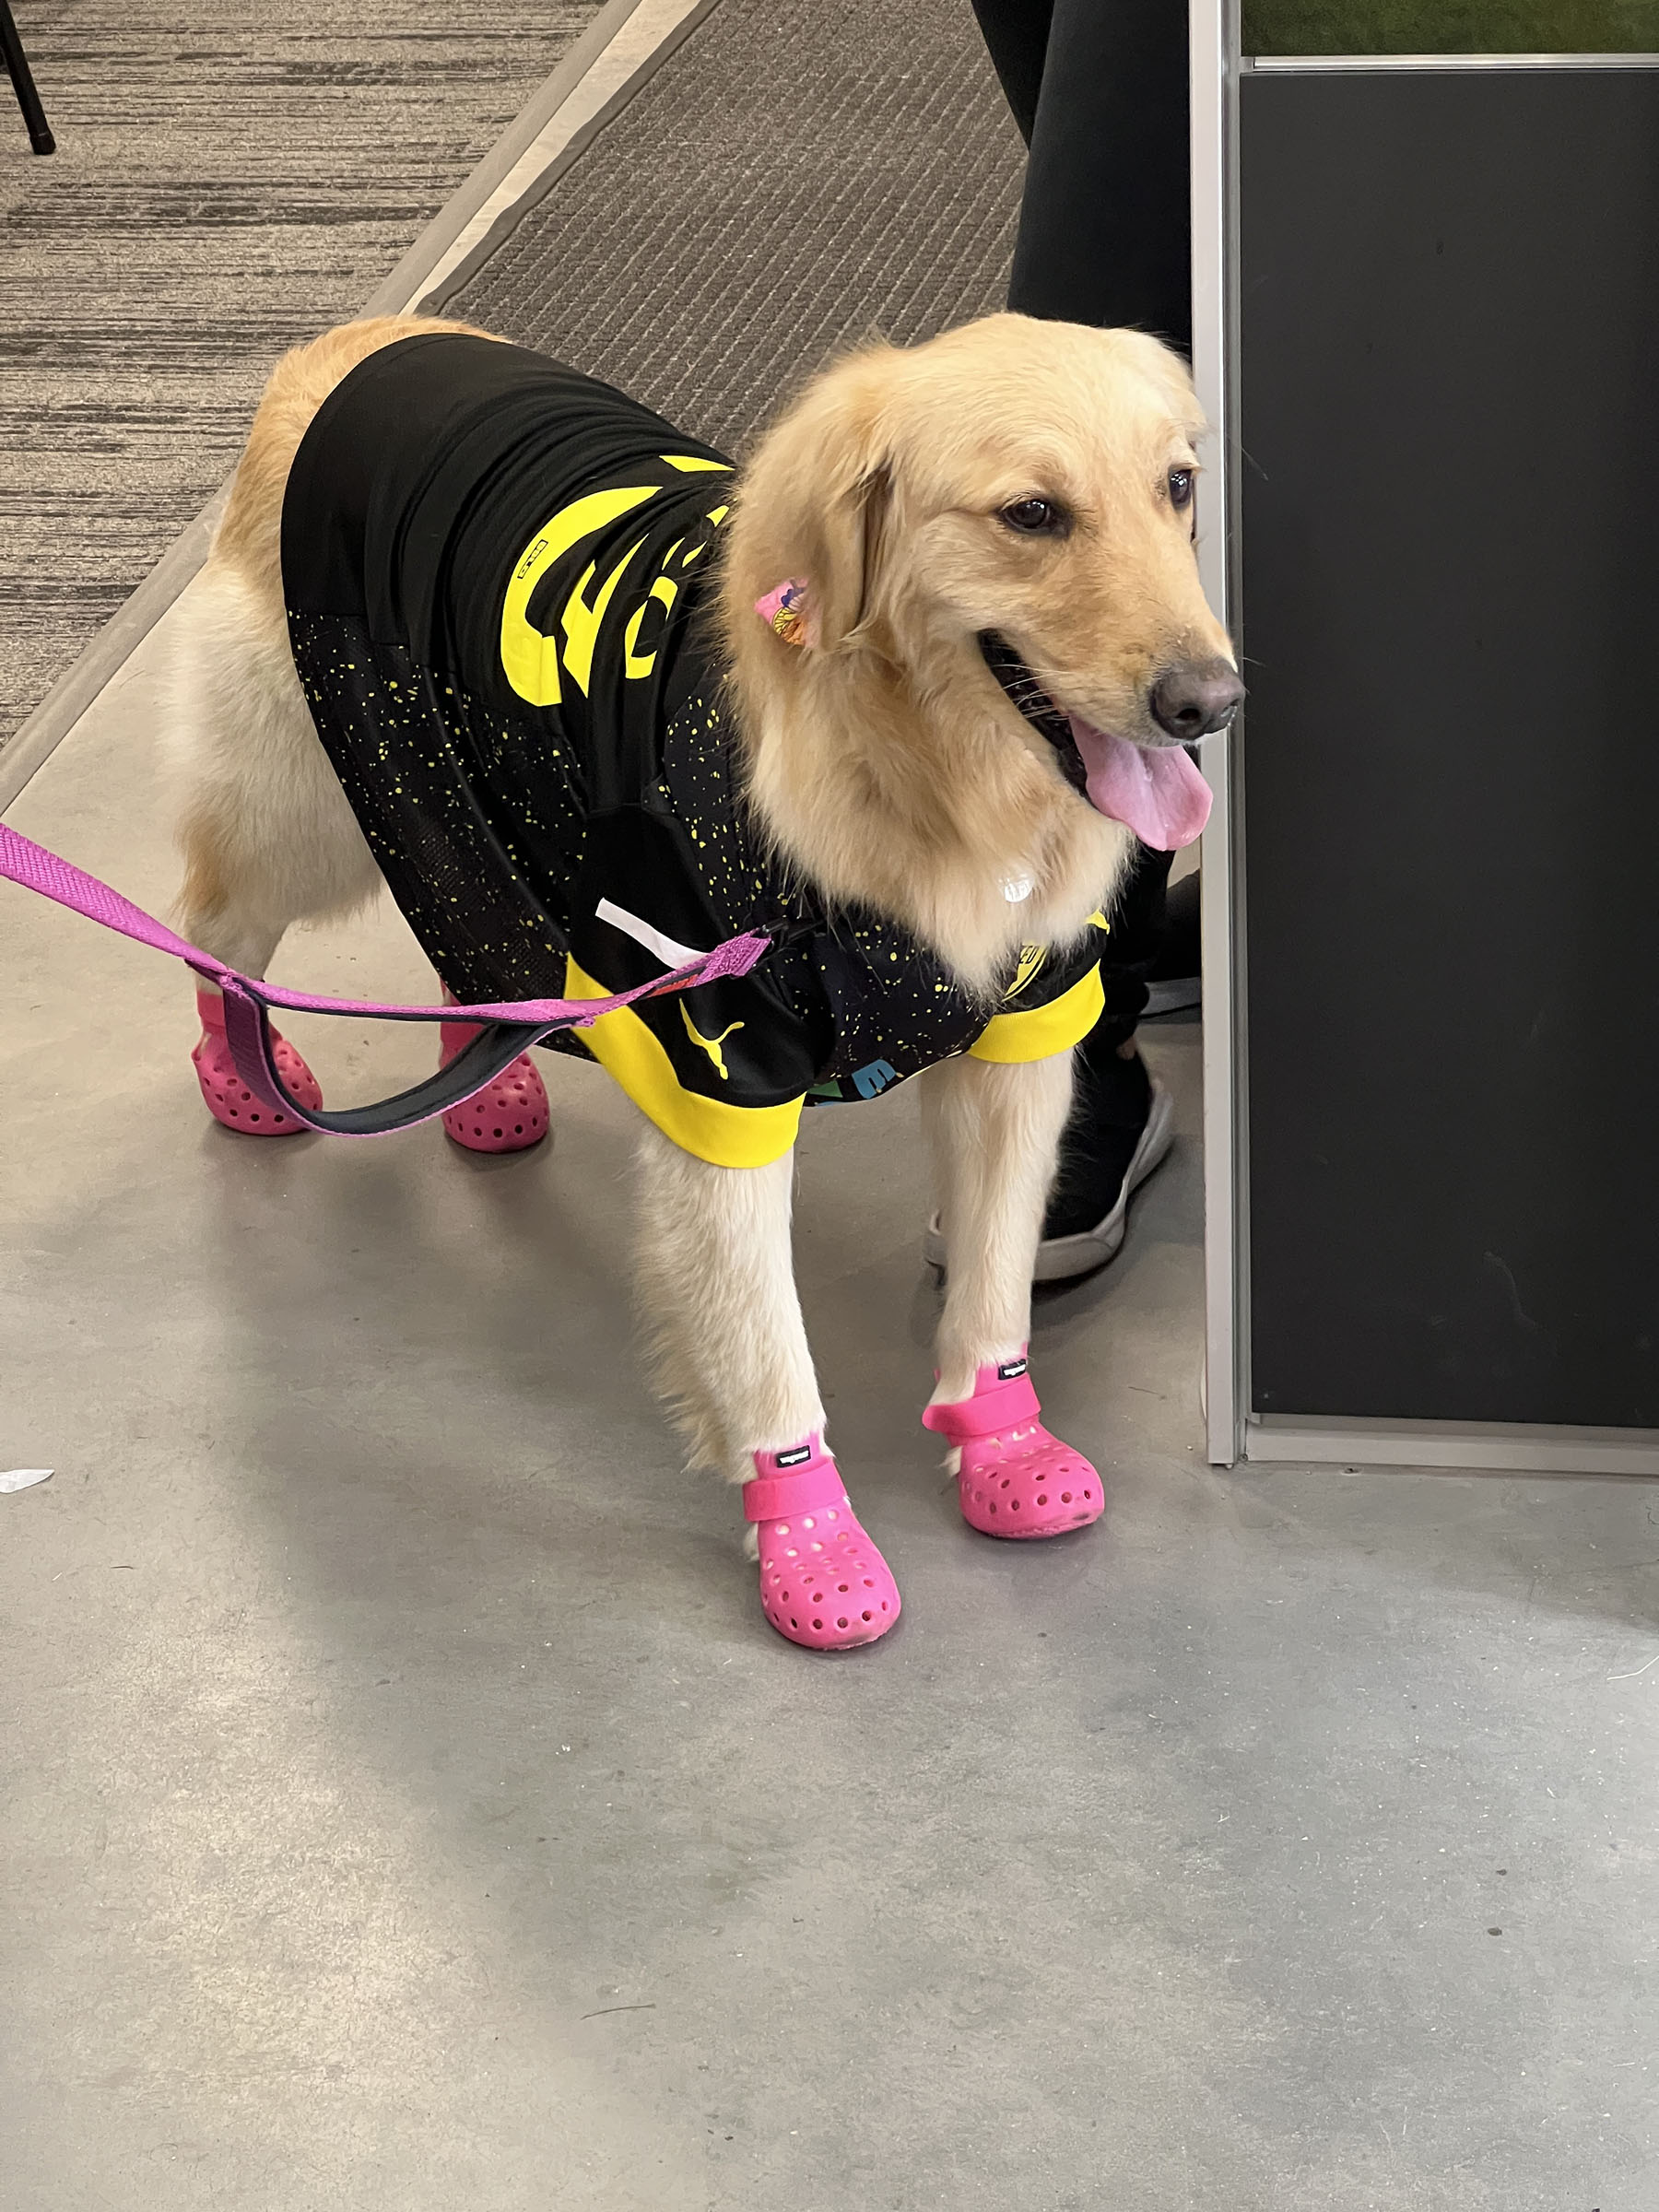 Choco 狗，金色拉布拉多犬，穿着黑色球衣和粉色 Crocs 鞋